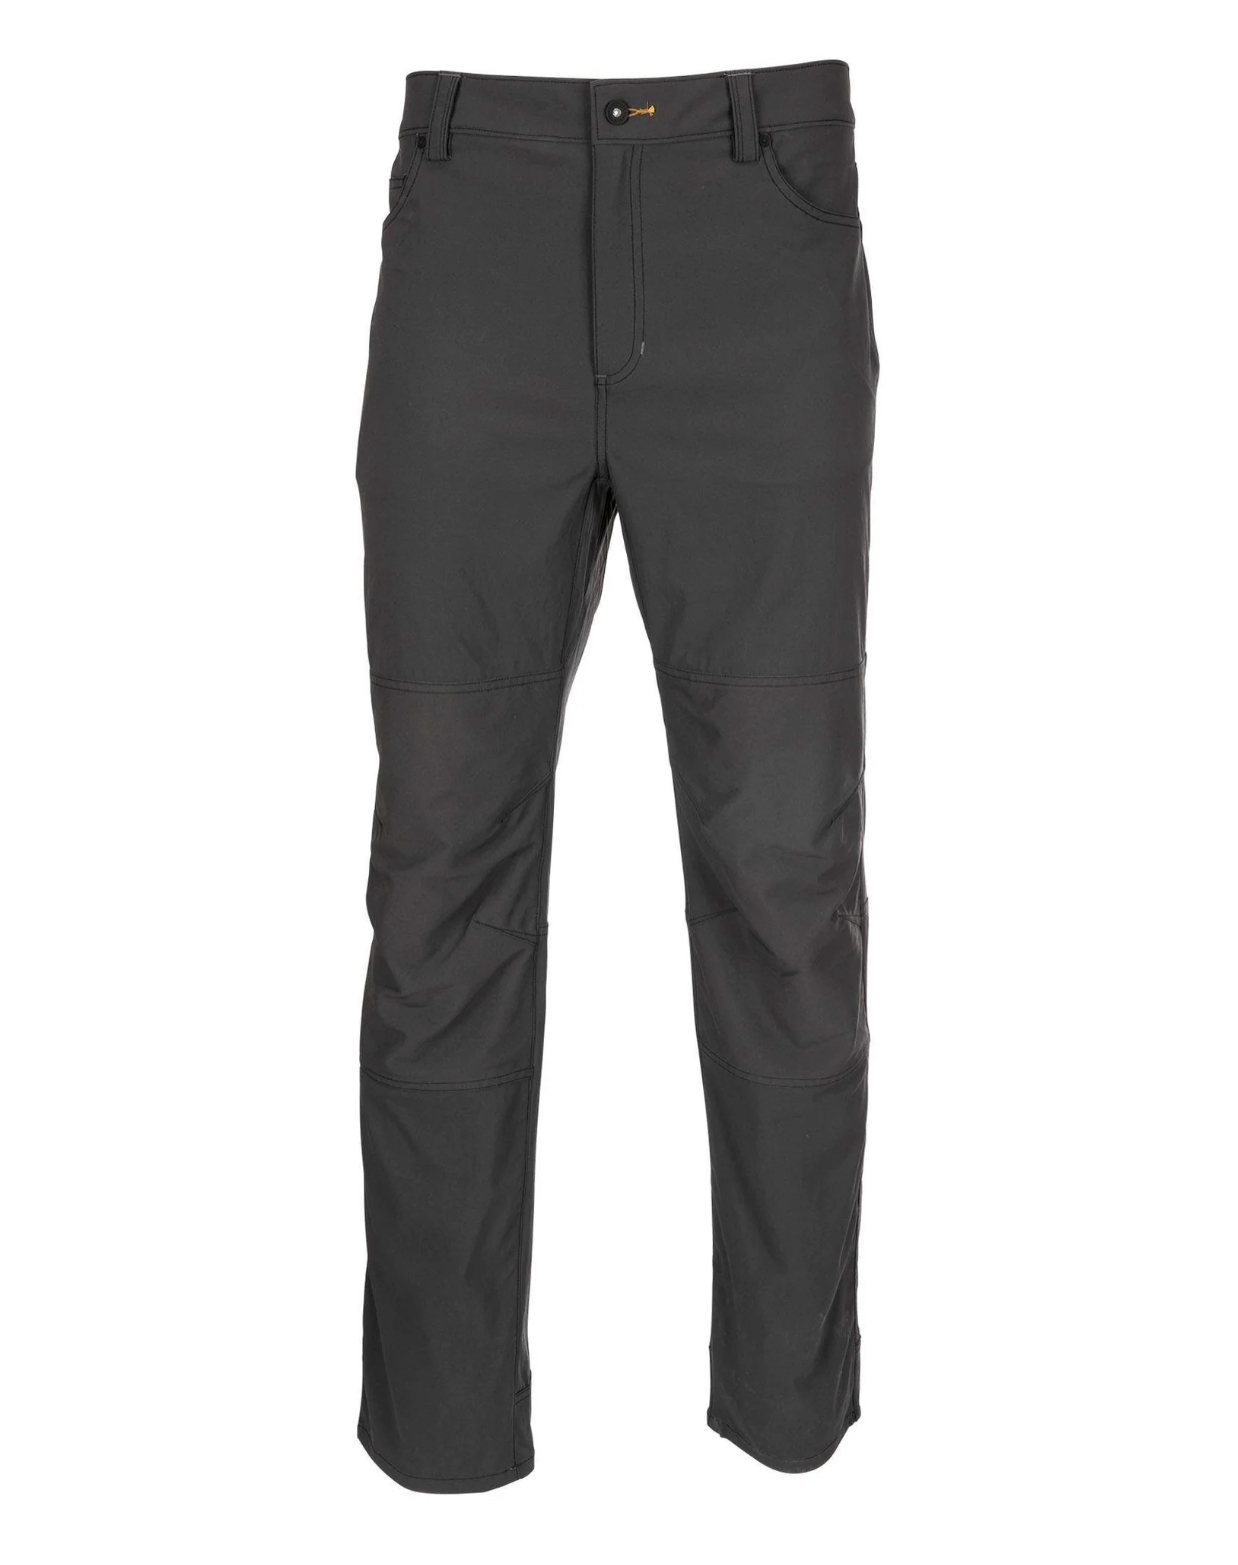 Simms M's Dockwear Pants - Carbon - Medium (34